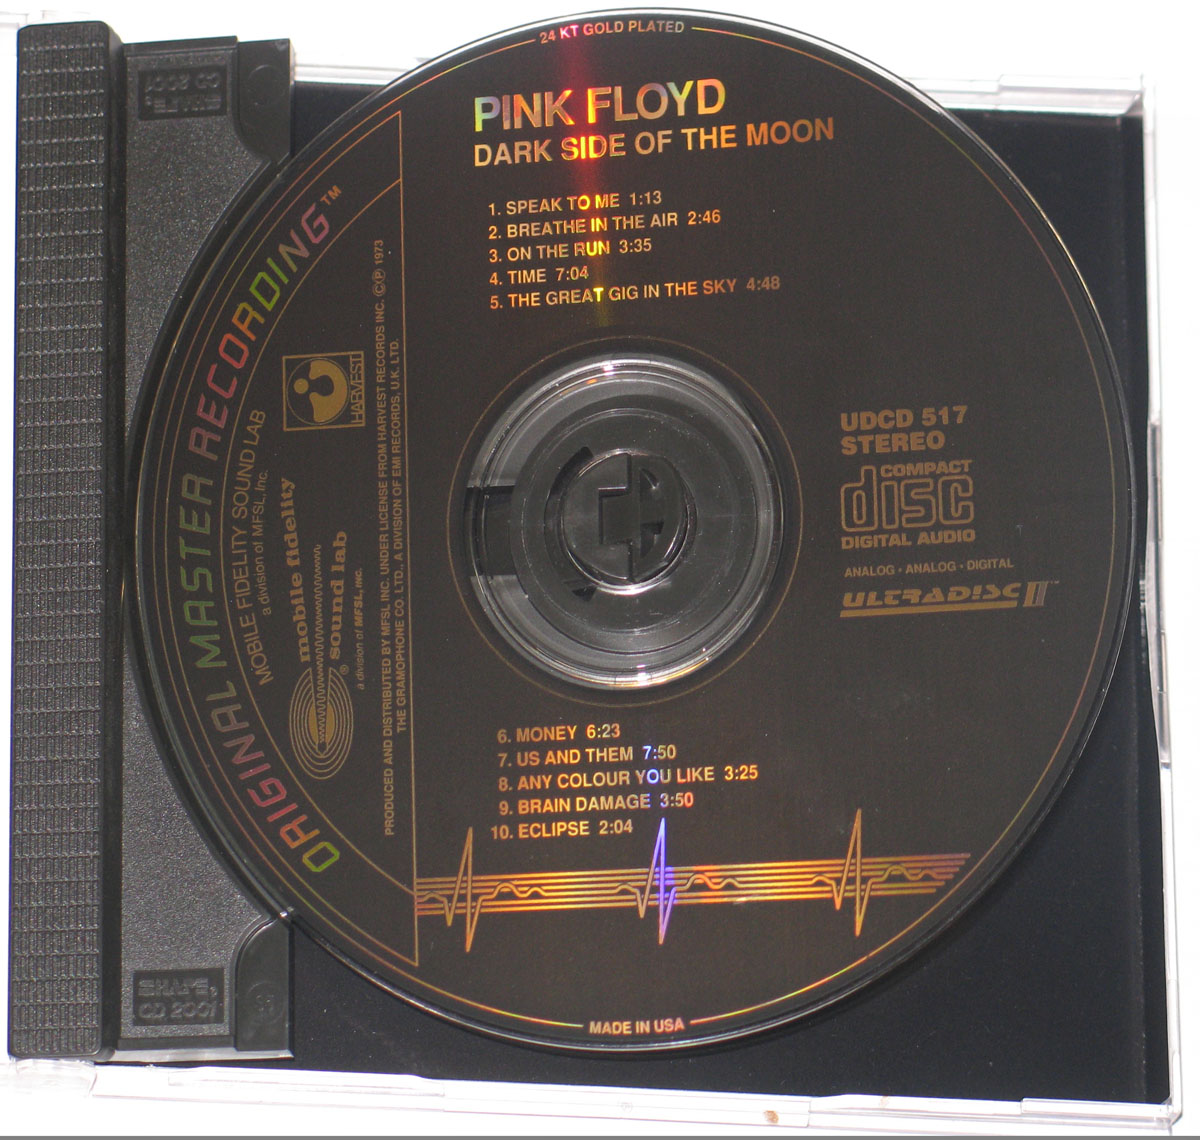 PINK FLOYD Dark Side of the Moon MFSL Ultradisc II Original Master